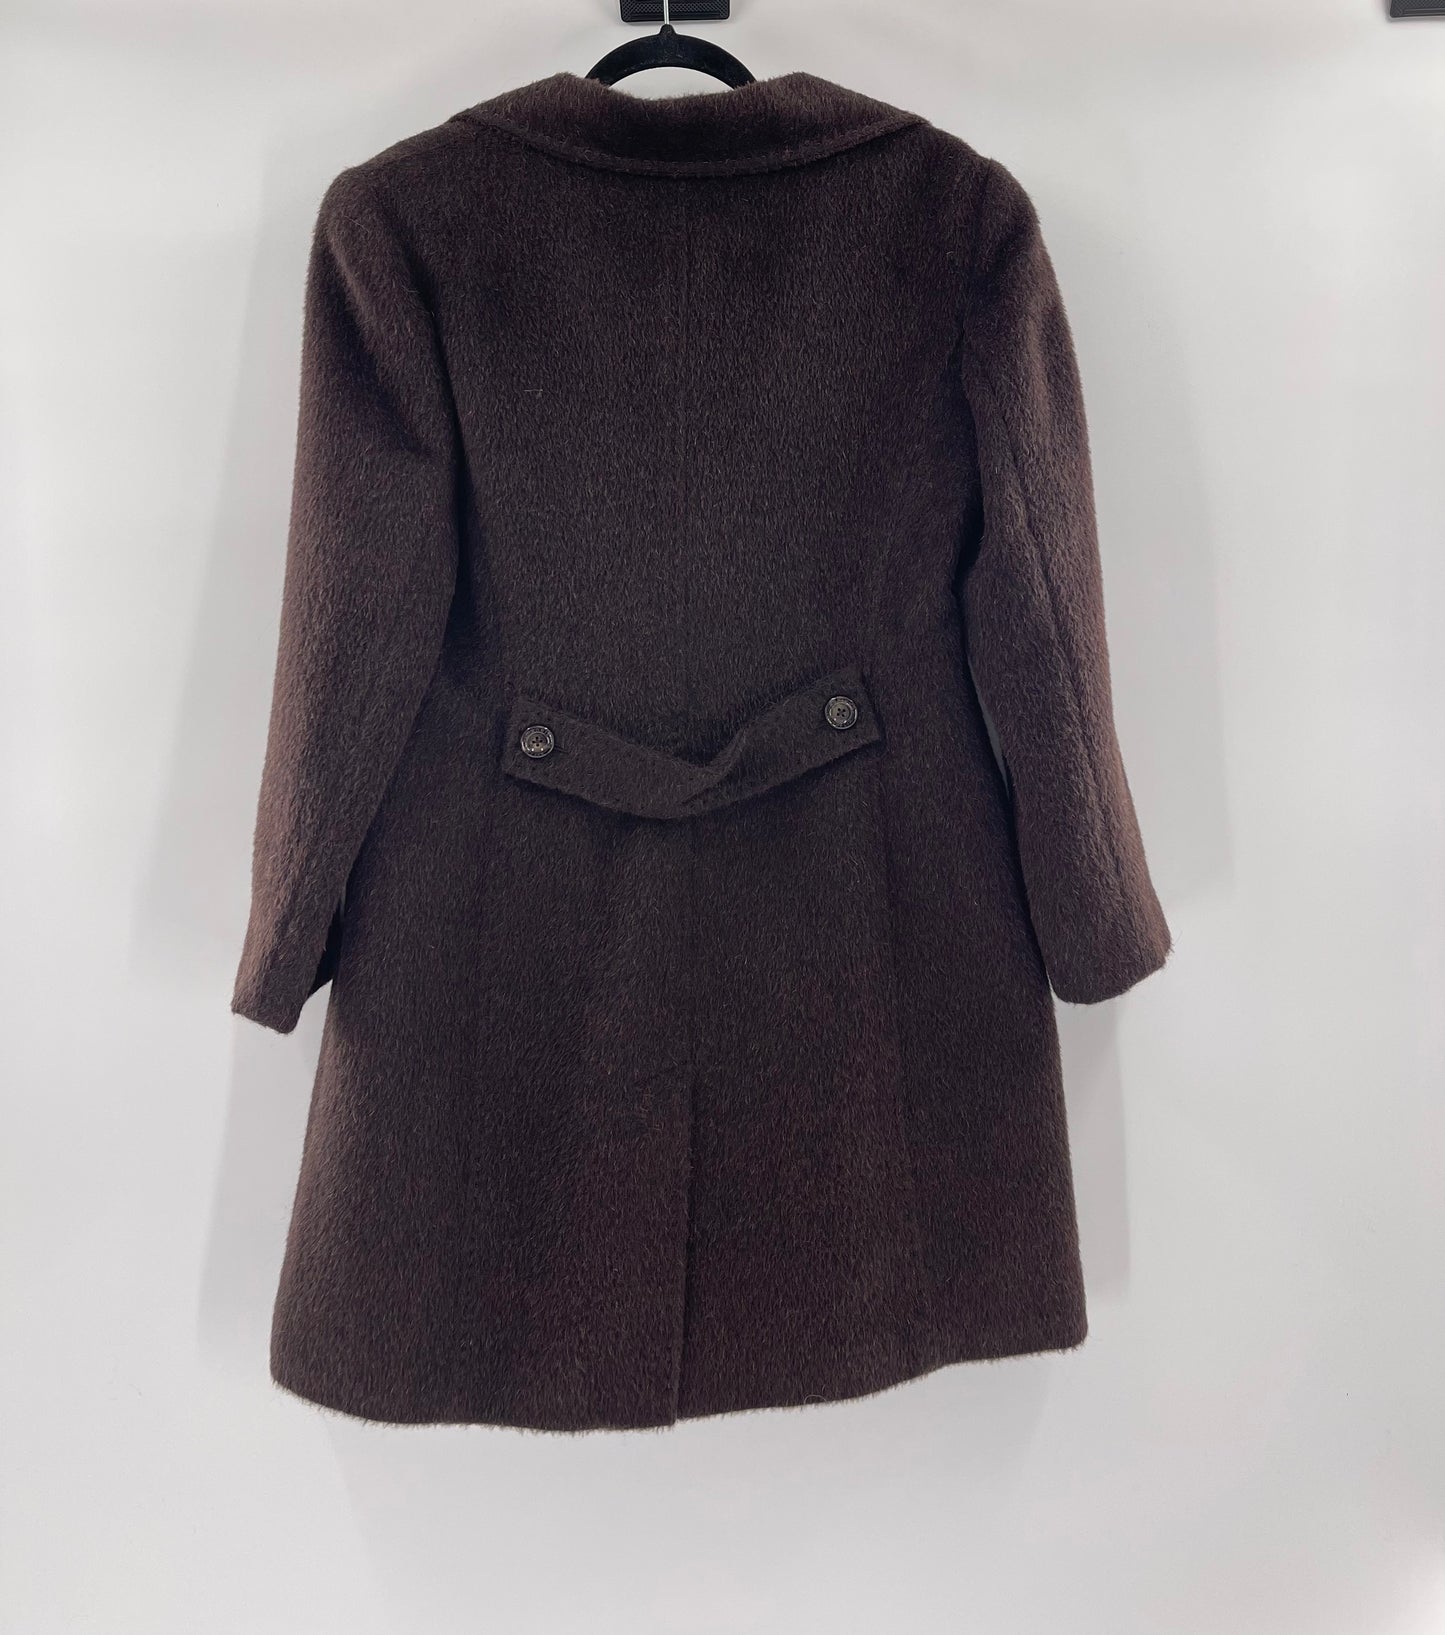 Adrienne Vittadini Brown Wool Coat (Size 8)